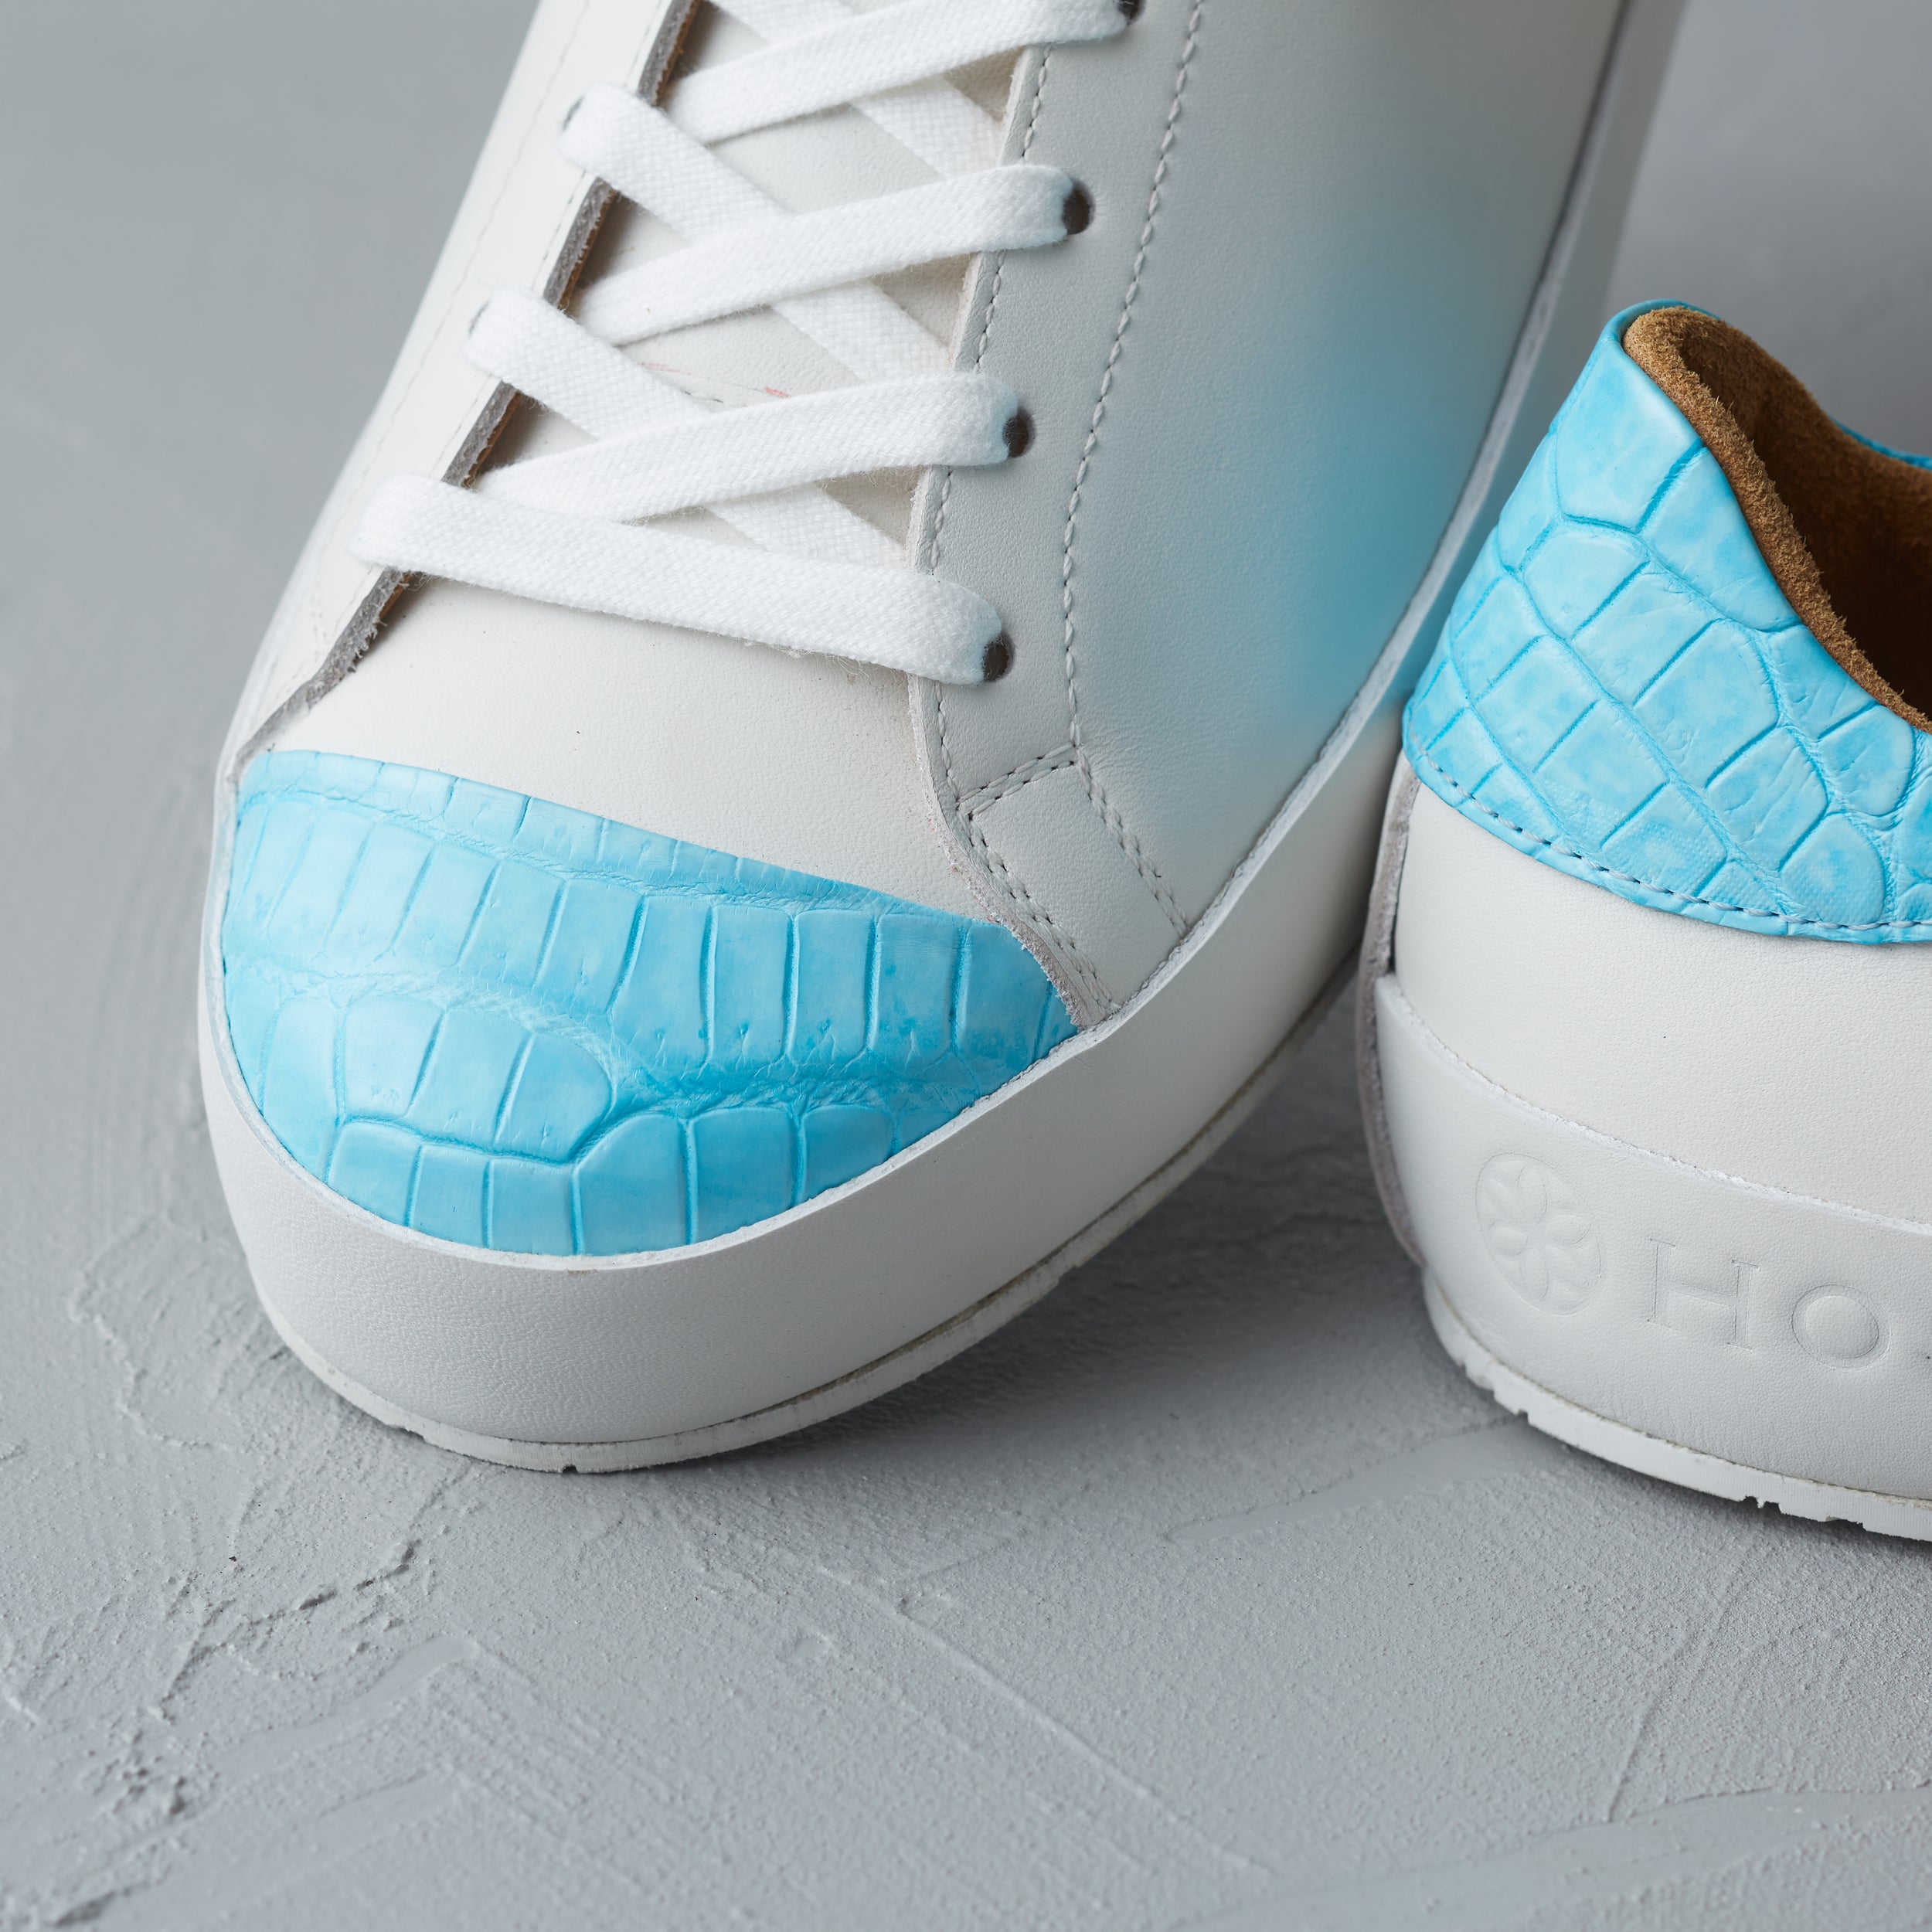 [women's] Liberte - low-top sneakers - combination toe white and blue crocodile